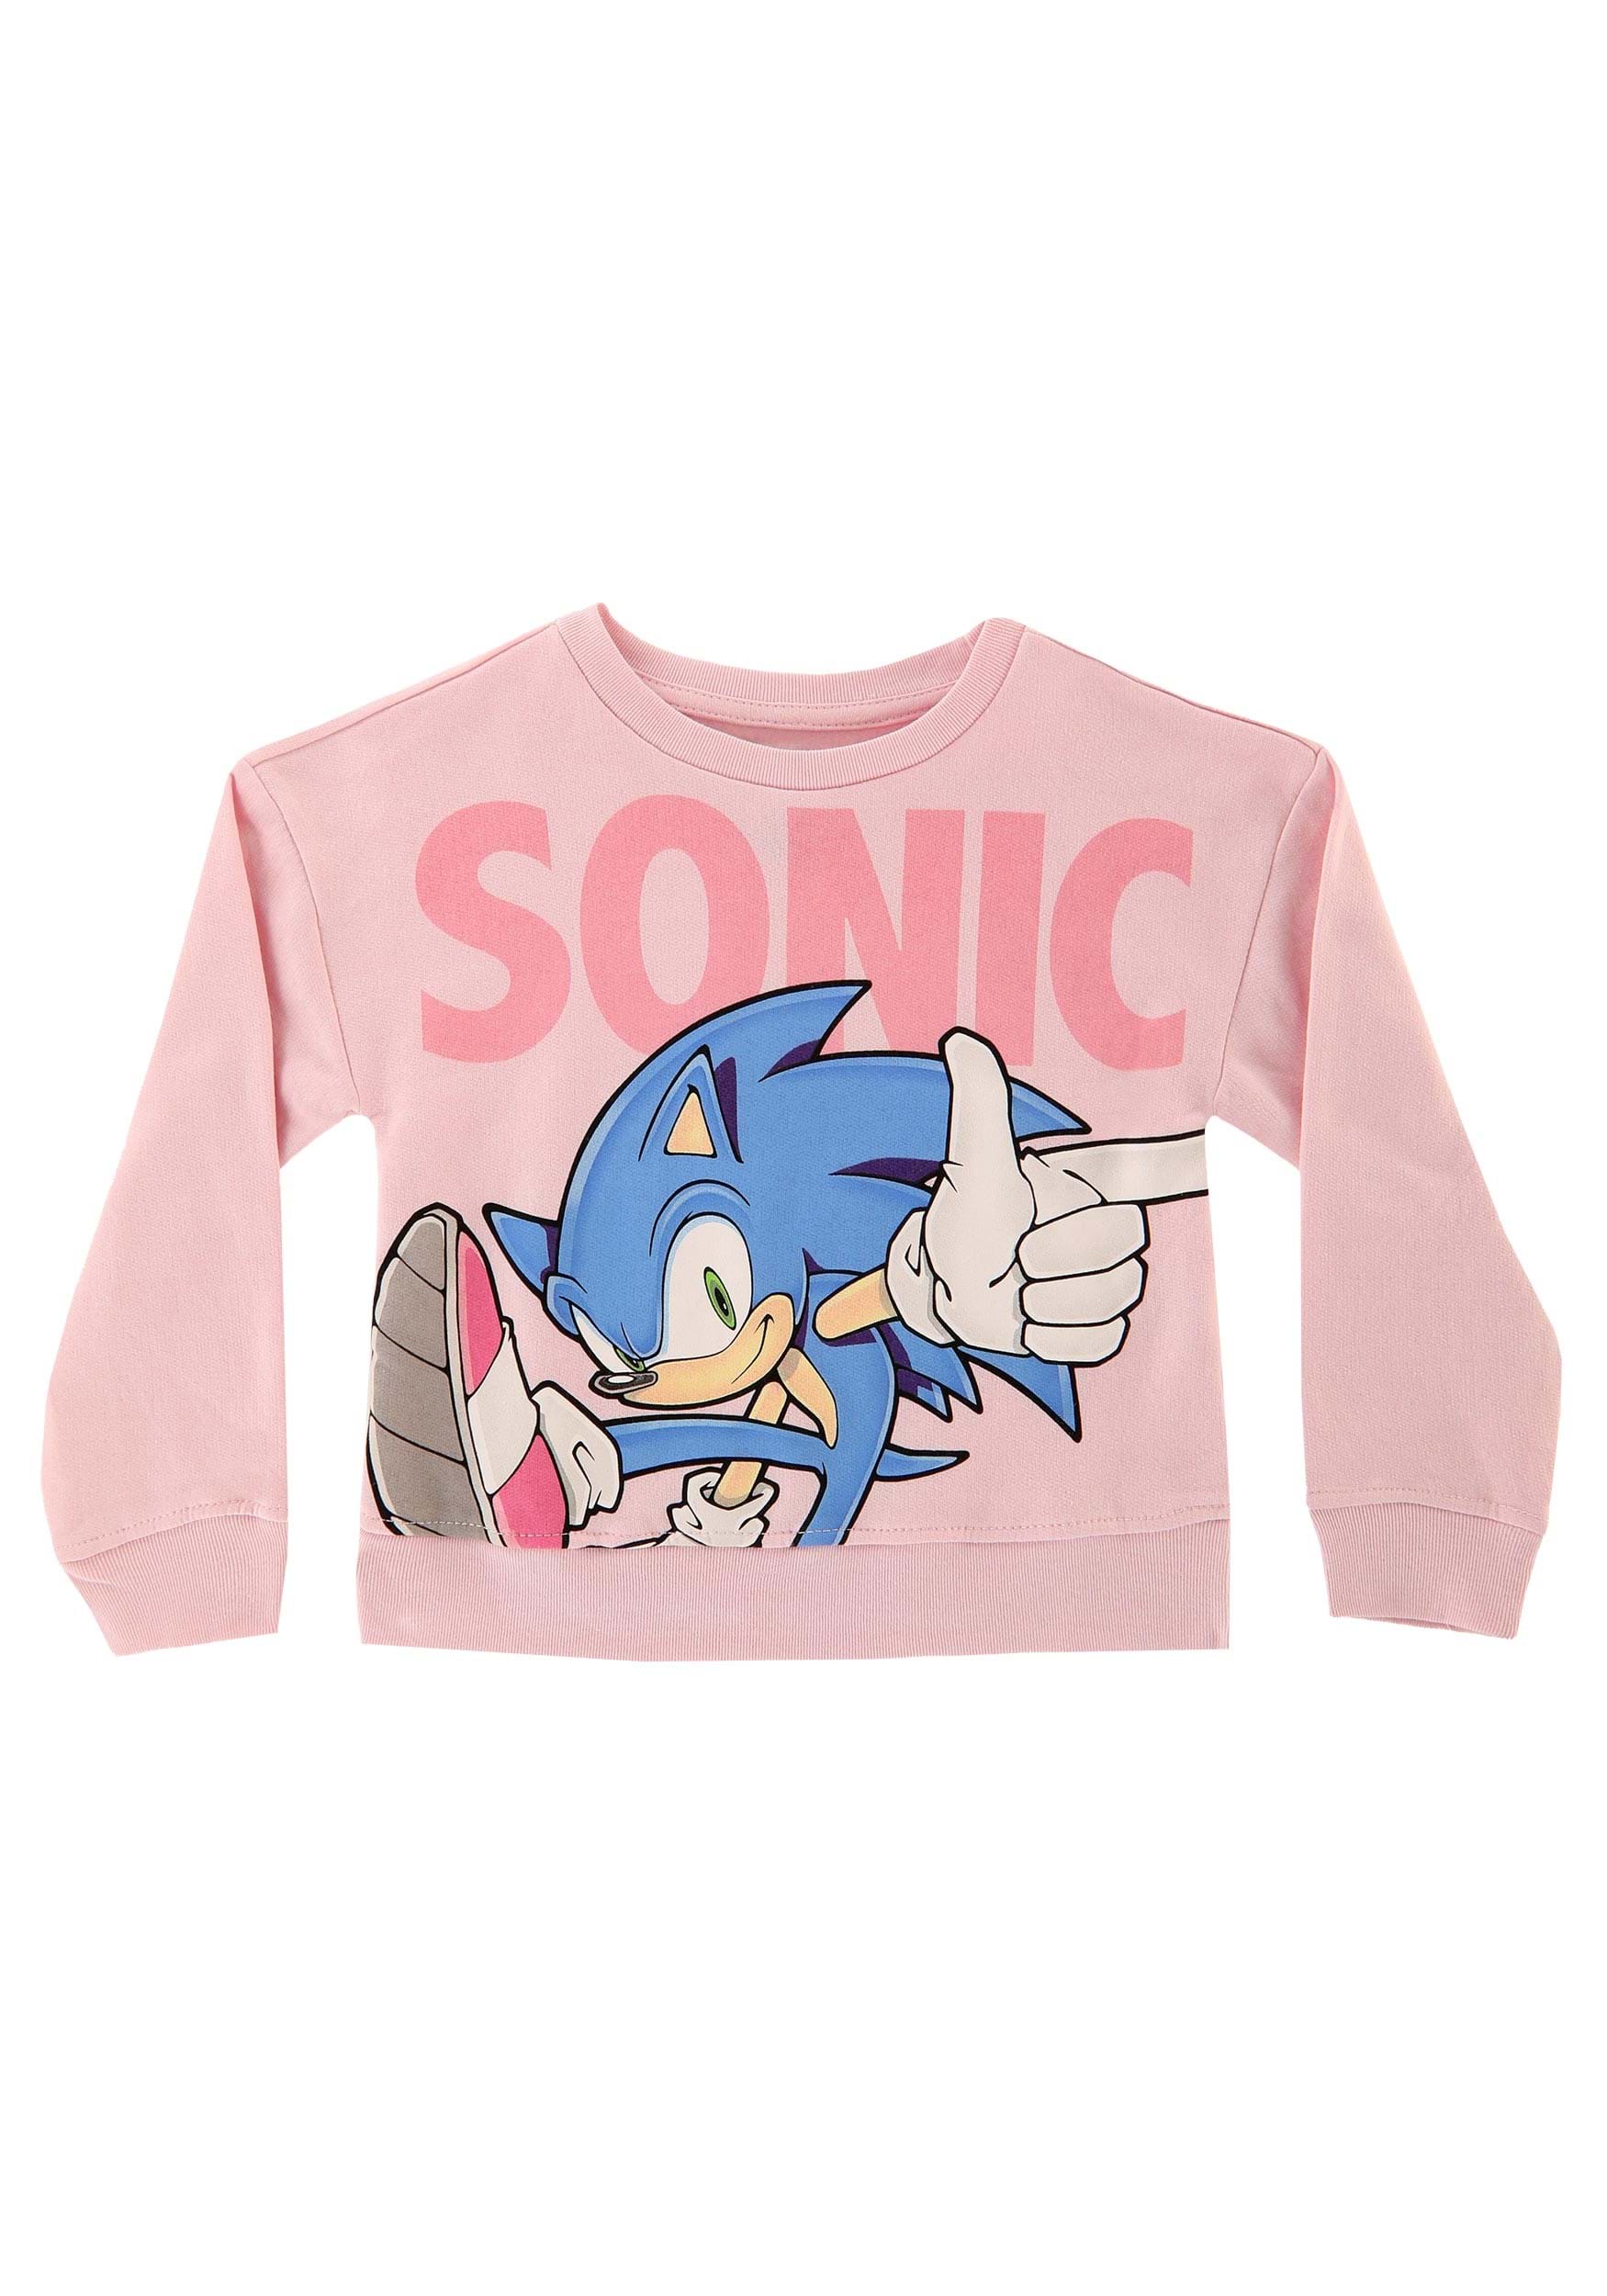 Sonic the Hedgehog Girls Sweatshirt